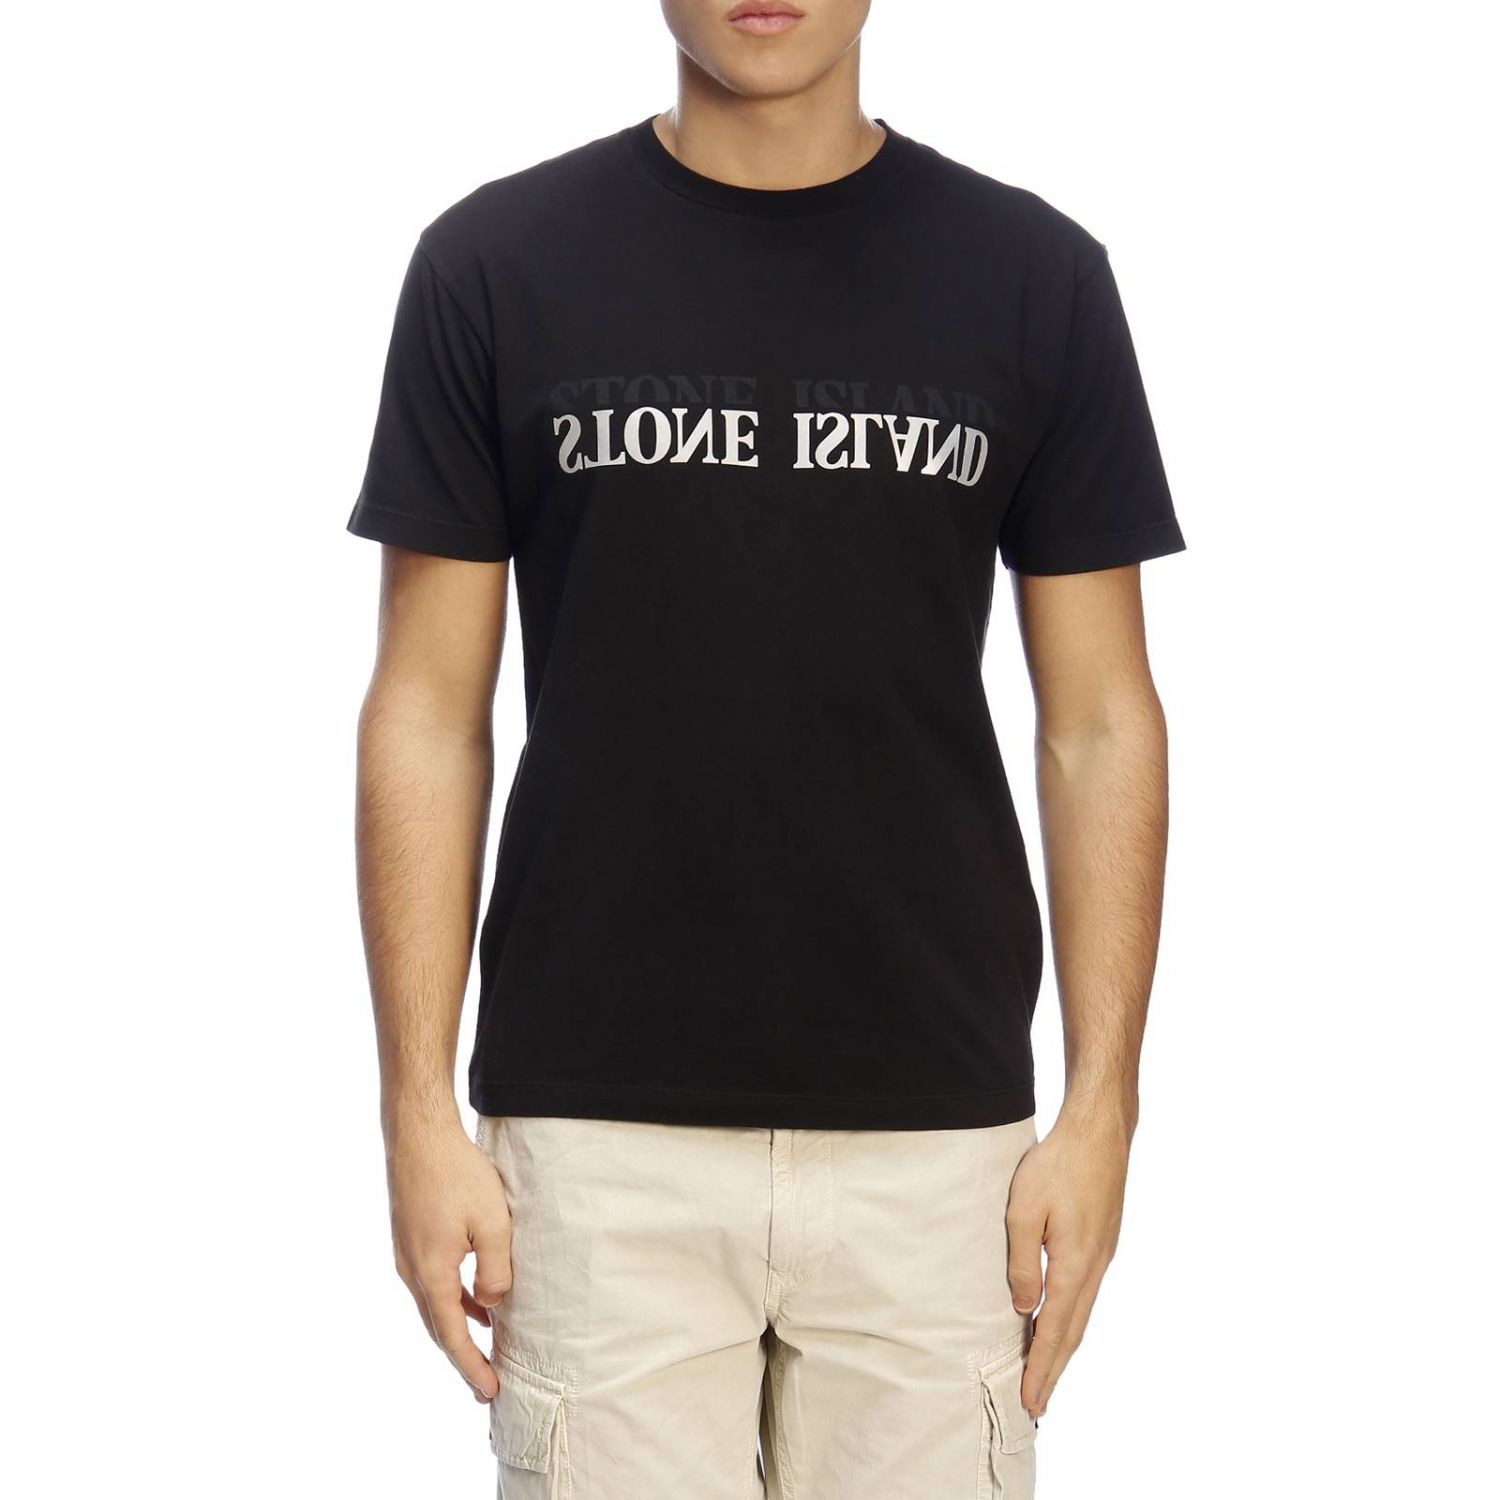 Stone Island Outlet: T-shirt men - Black | T-Shirt Stone Island 2NS88 ...